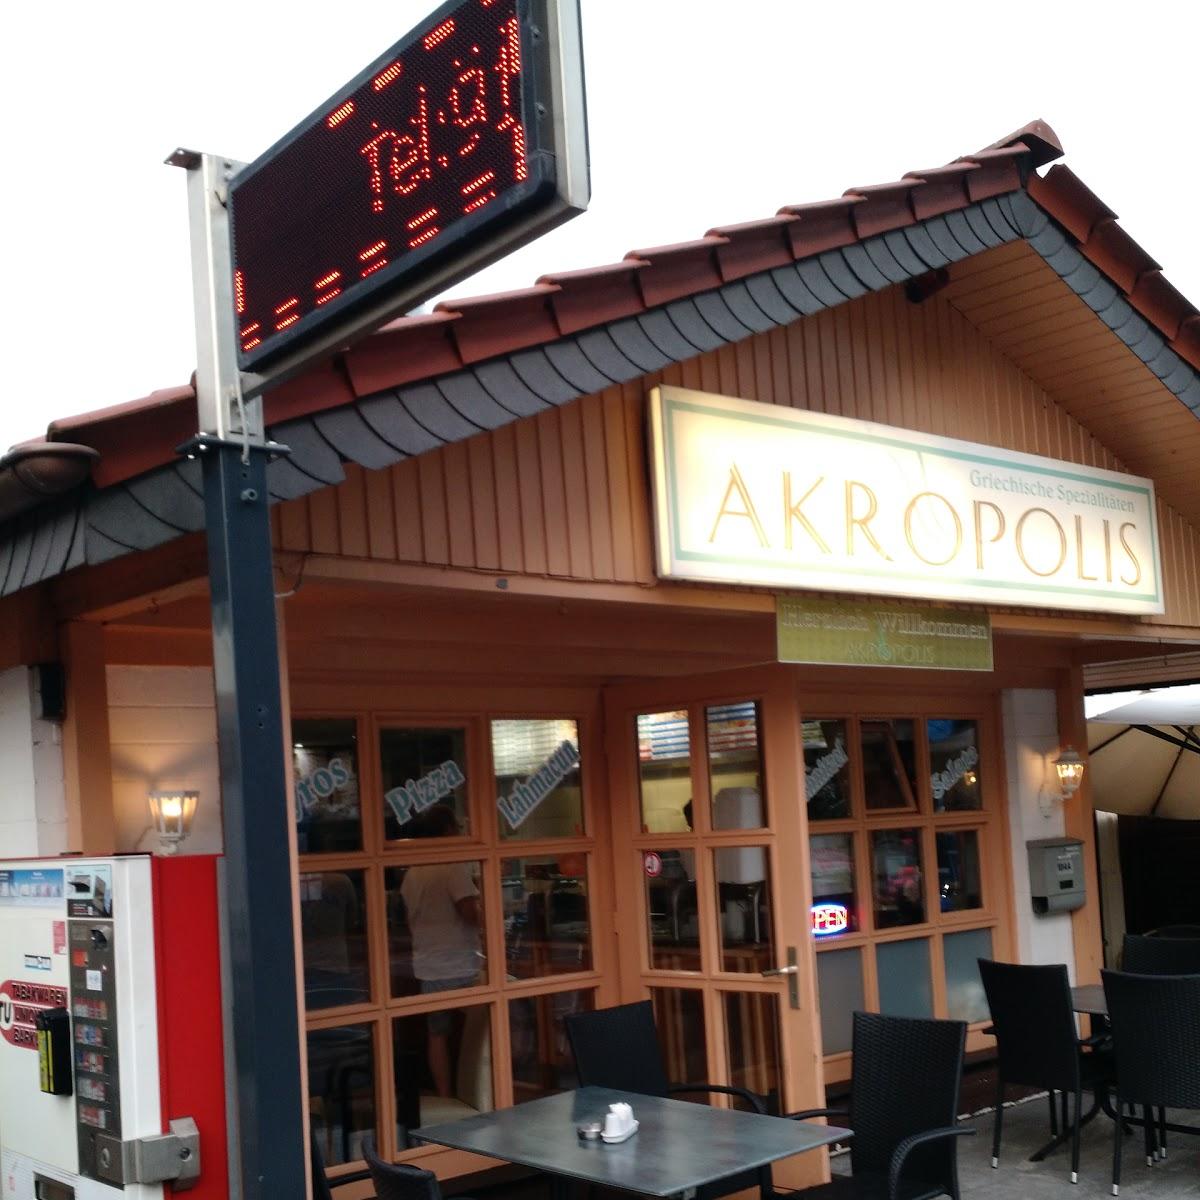 Restaurant "Akropolis" in Löhne